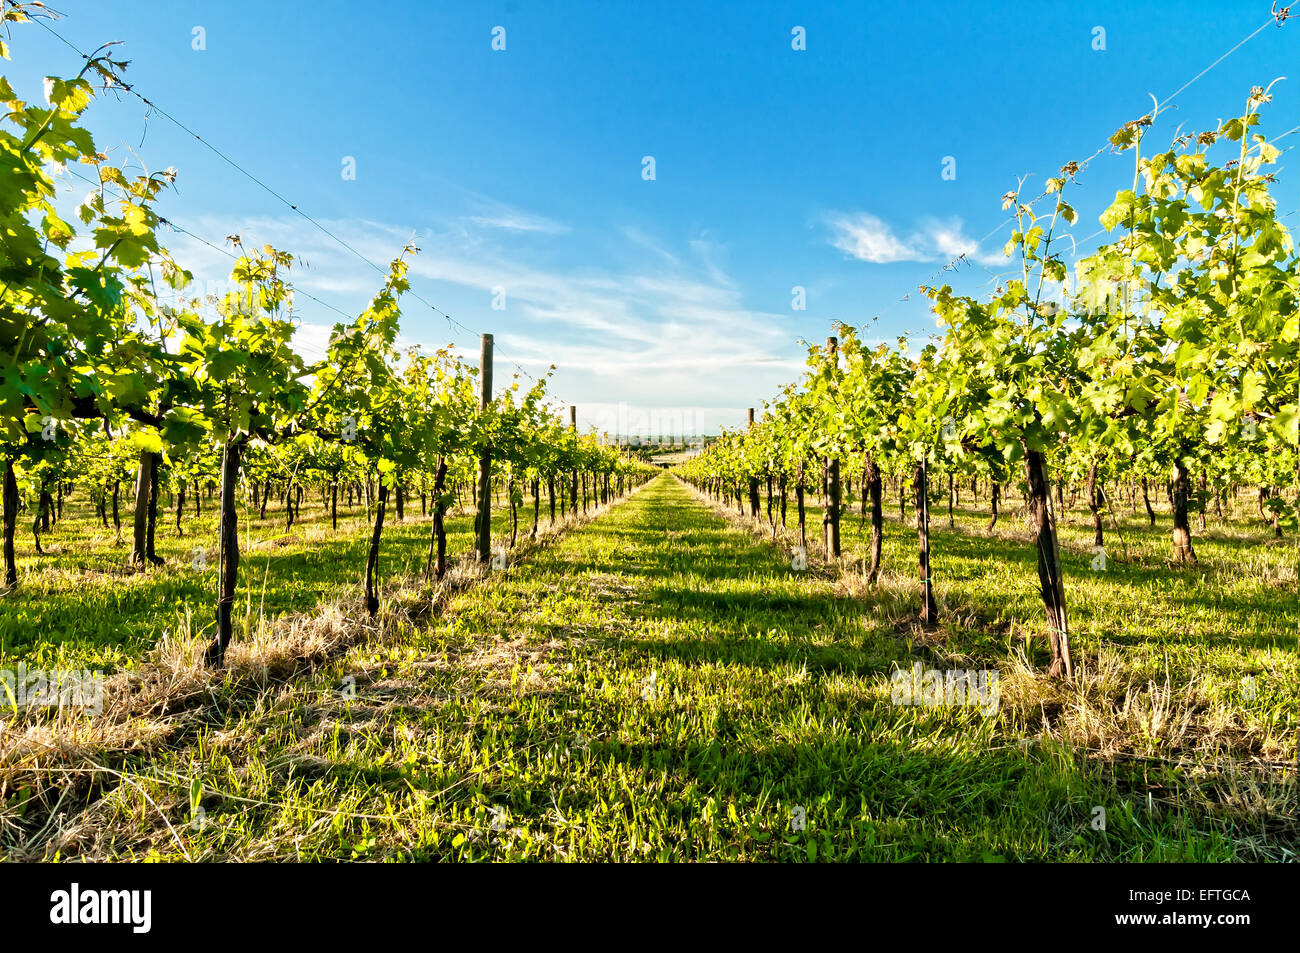 A vineyard in Reggio Emilia hills in Emilia Romagna, Italy, in springtime Stock Photo